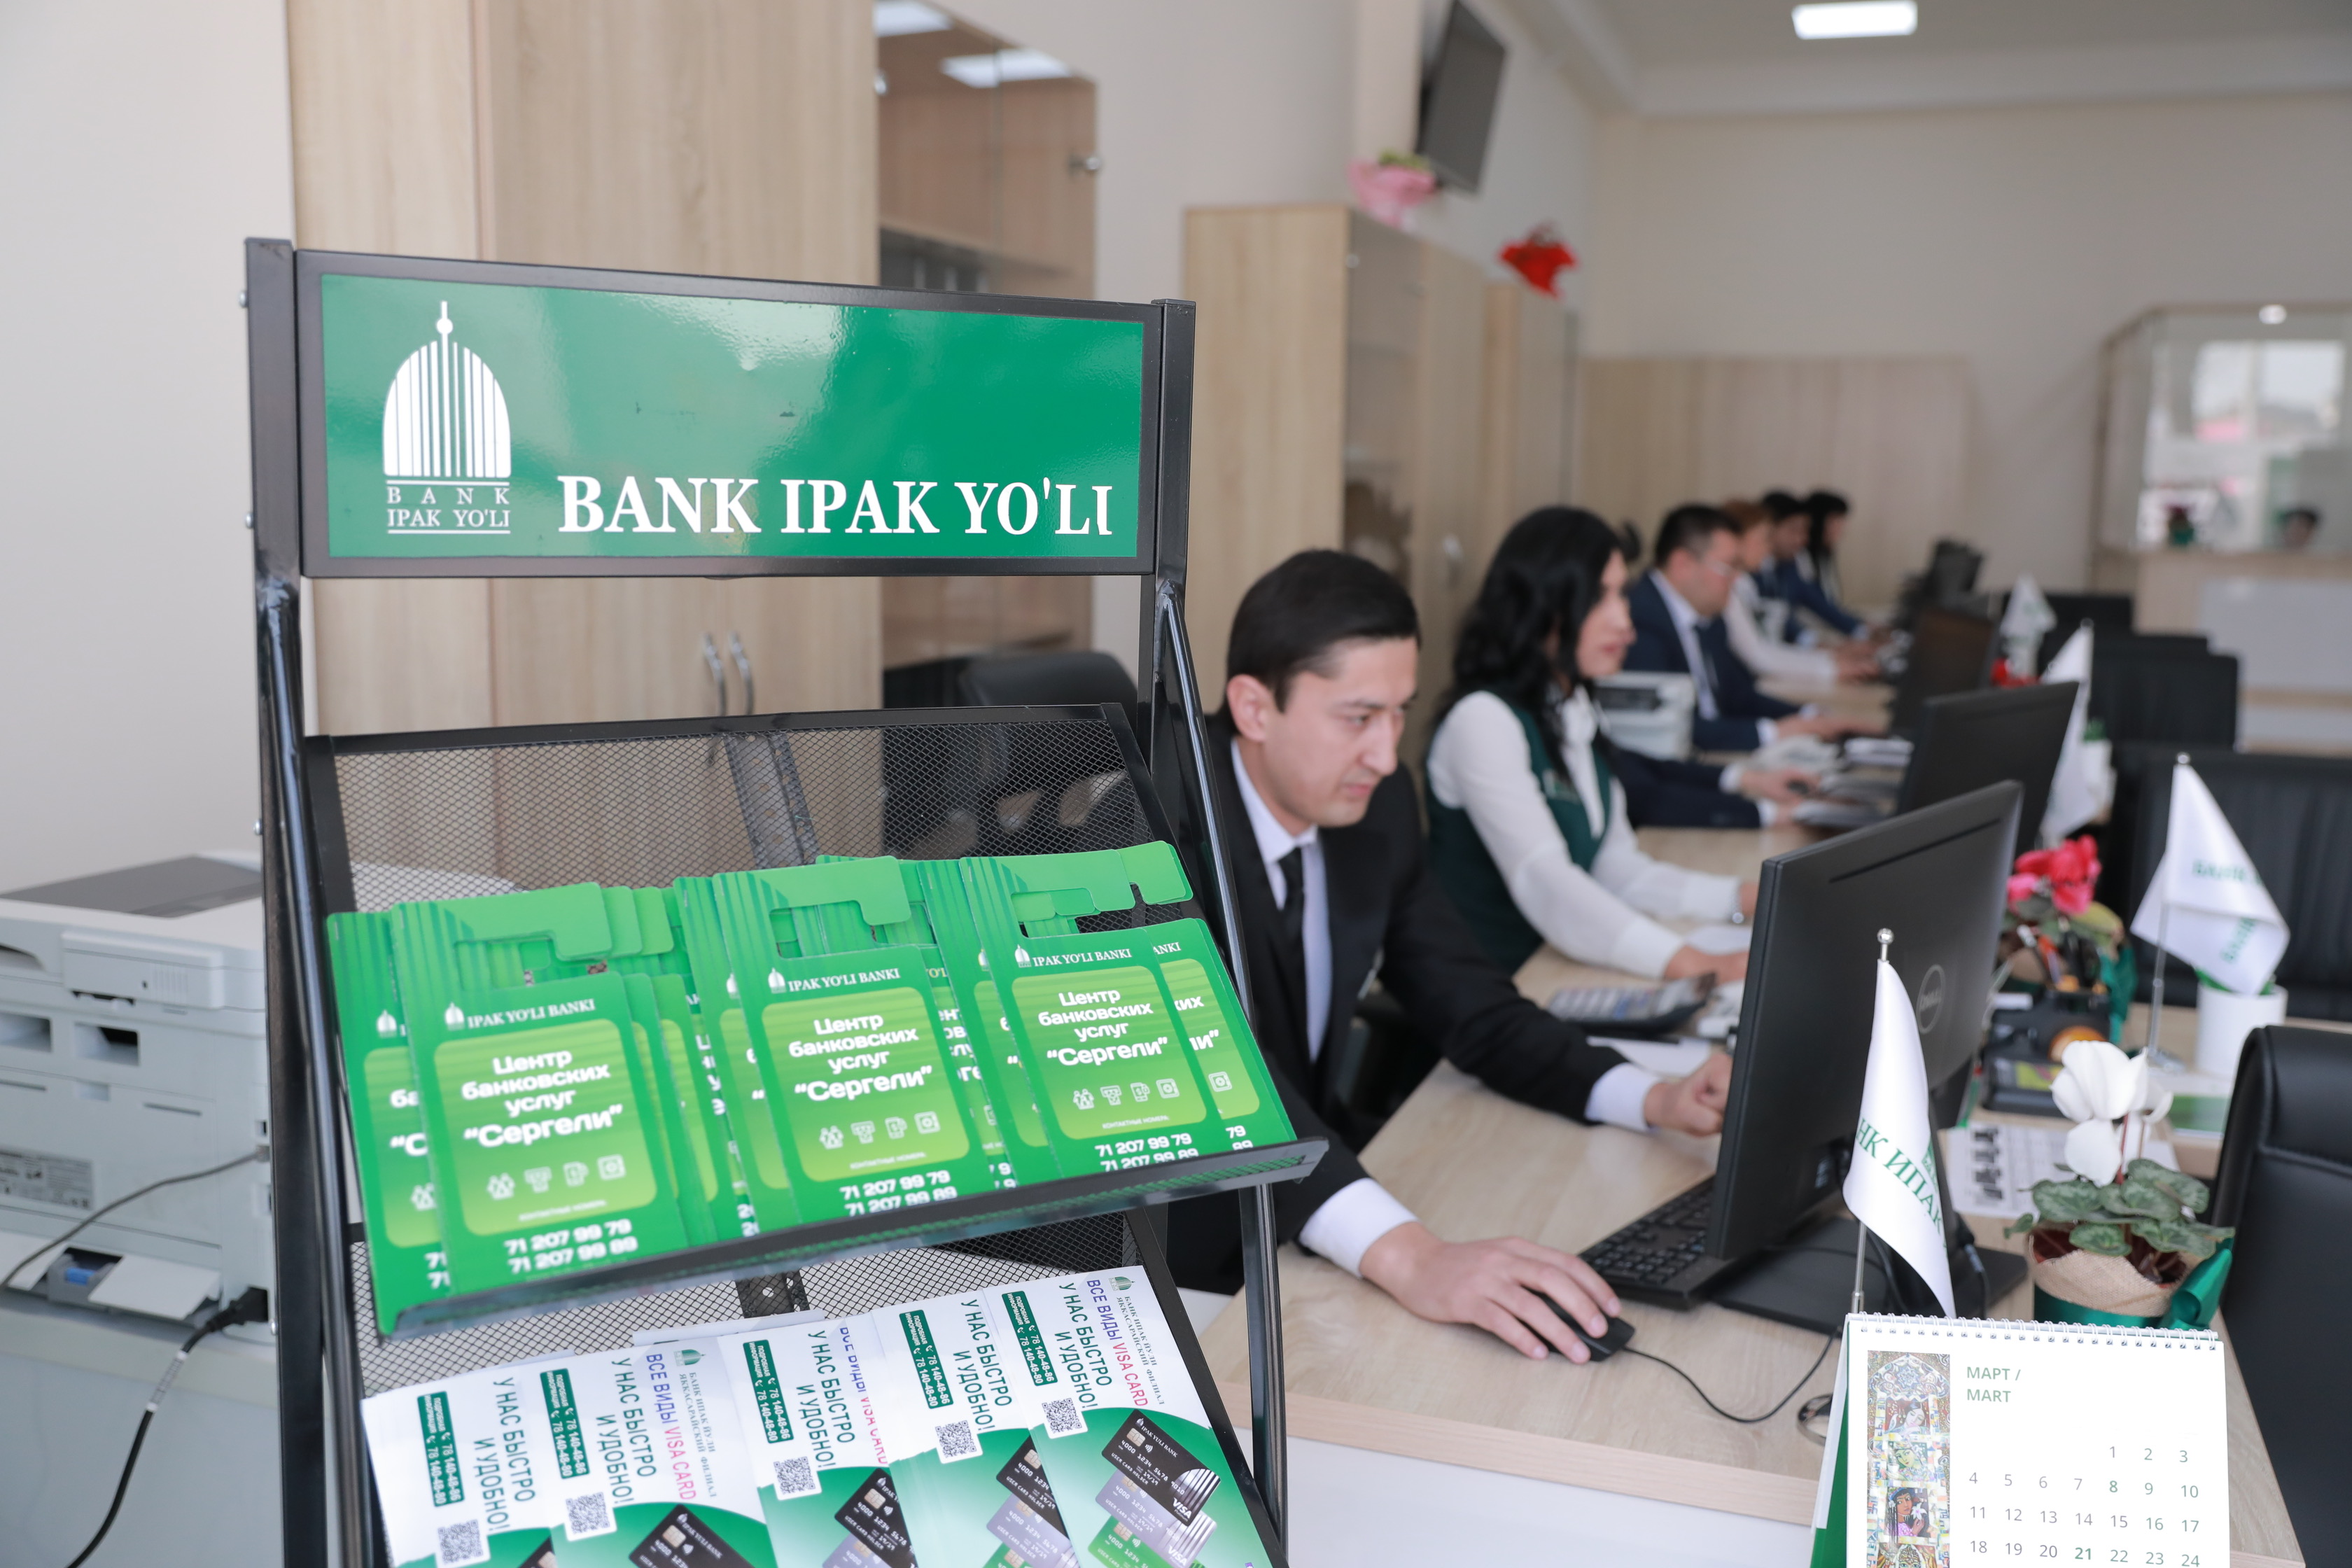 Йули банк ташкент. Ипак банк Узбекистан. Банк Ипак йули в Ташкенте. Банк Ипак йули офис. Ipak Yuli Bank logo.